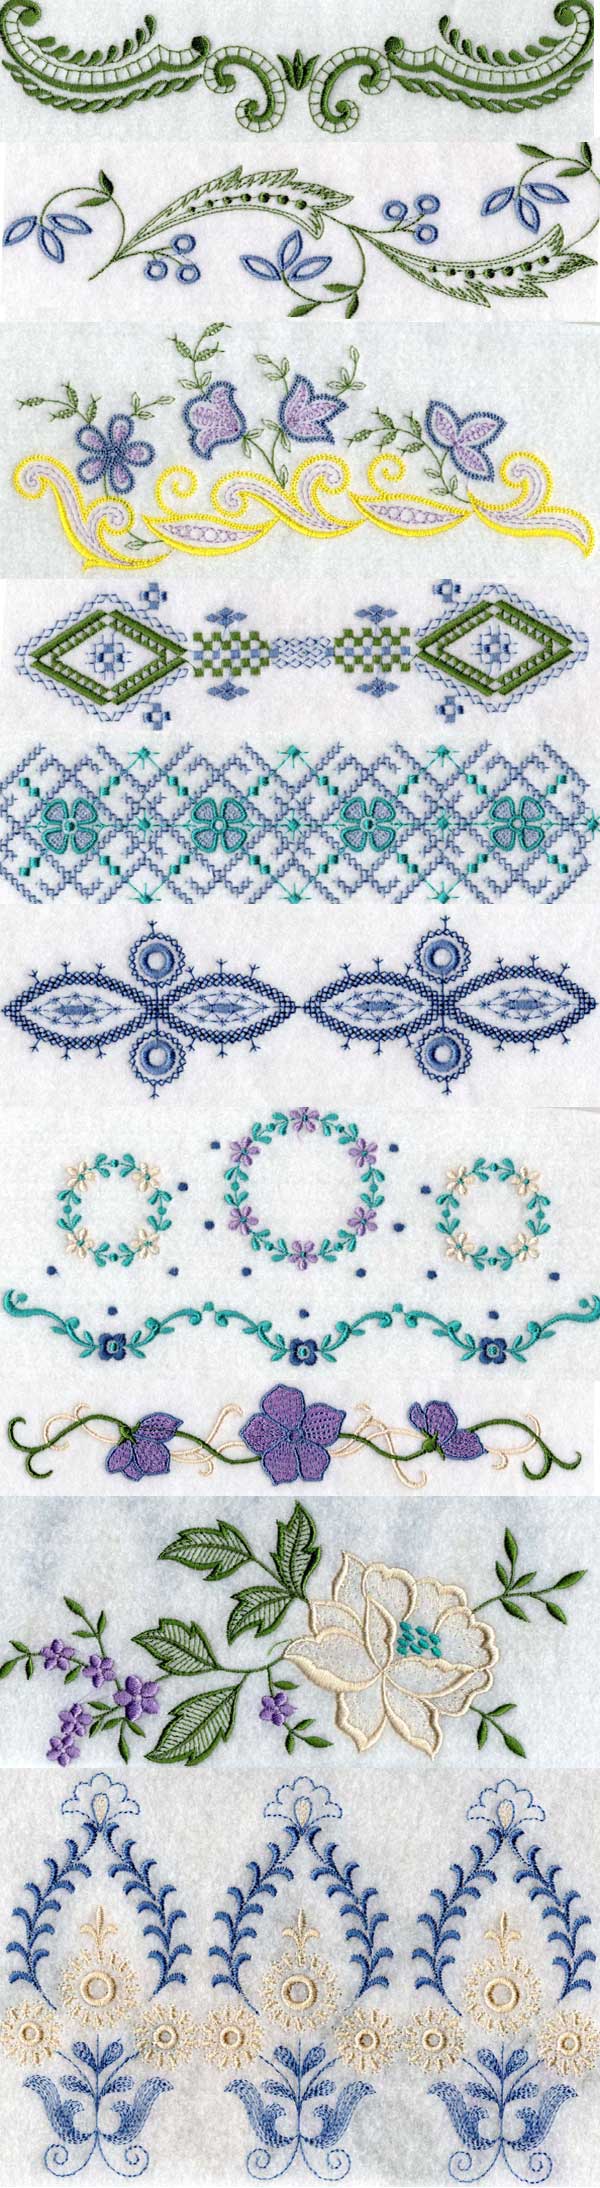 Linens 1 Embroidery Machine Design Details